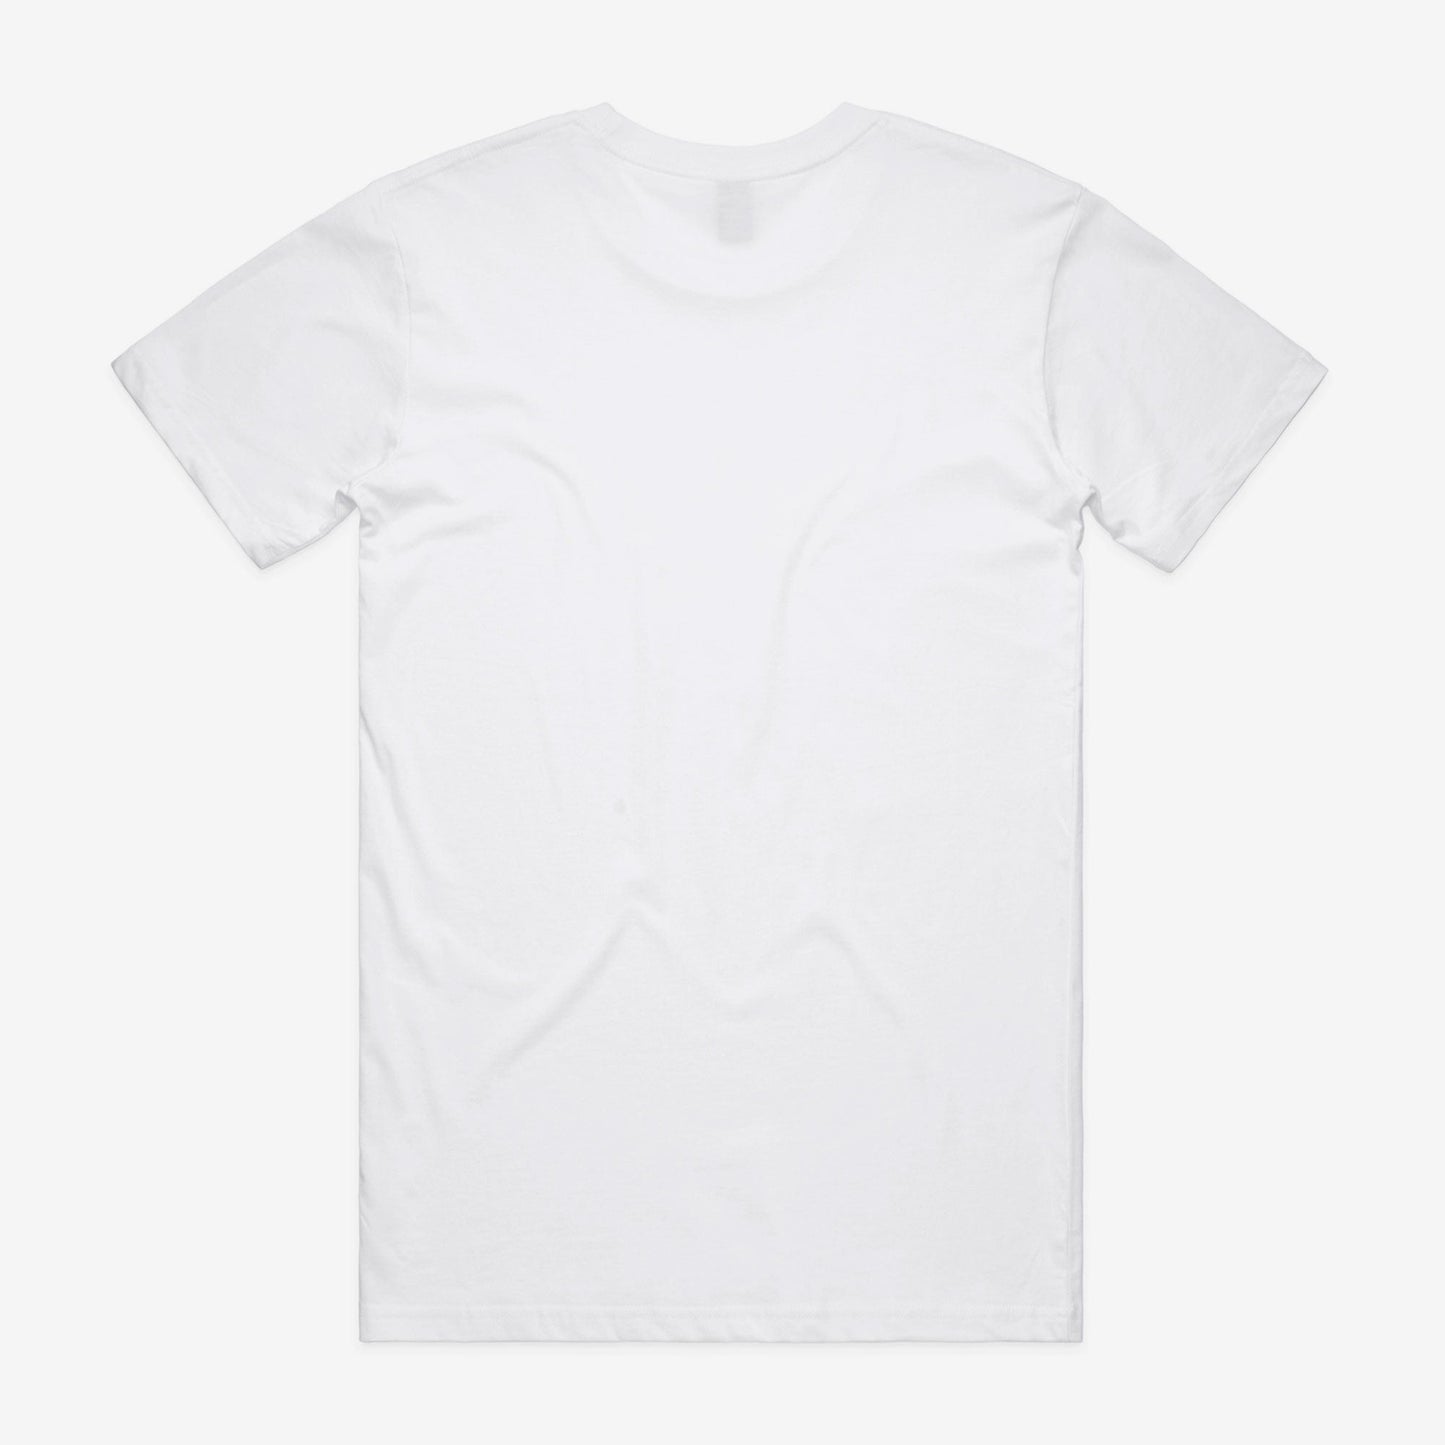 My Custom Design Physical product T-shirt | Crew neck